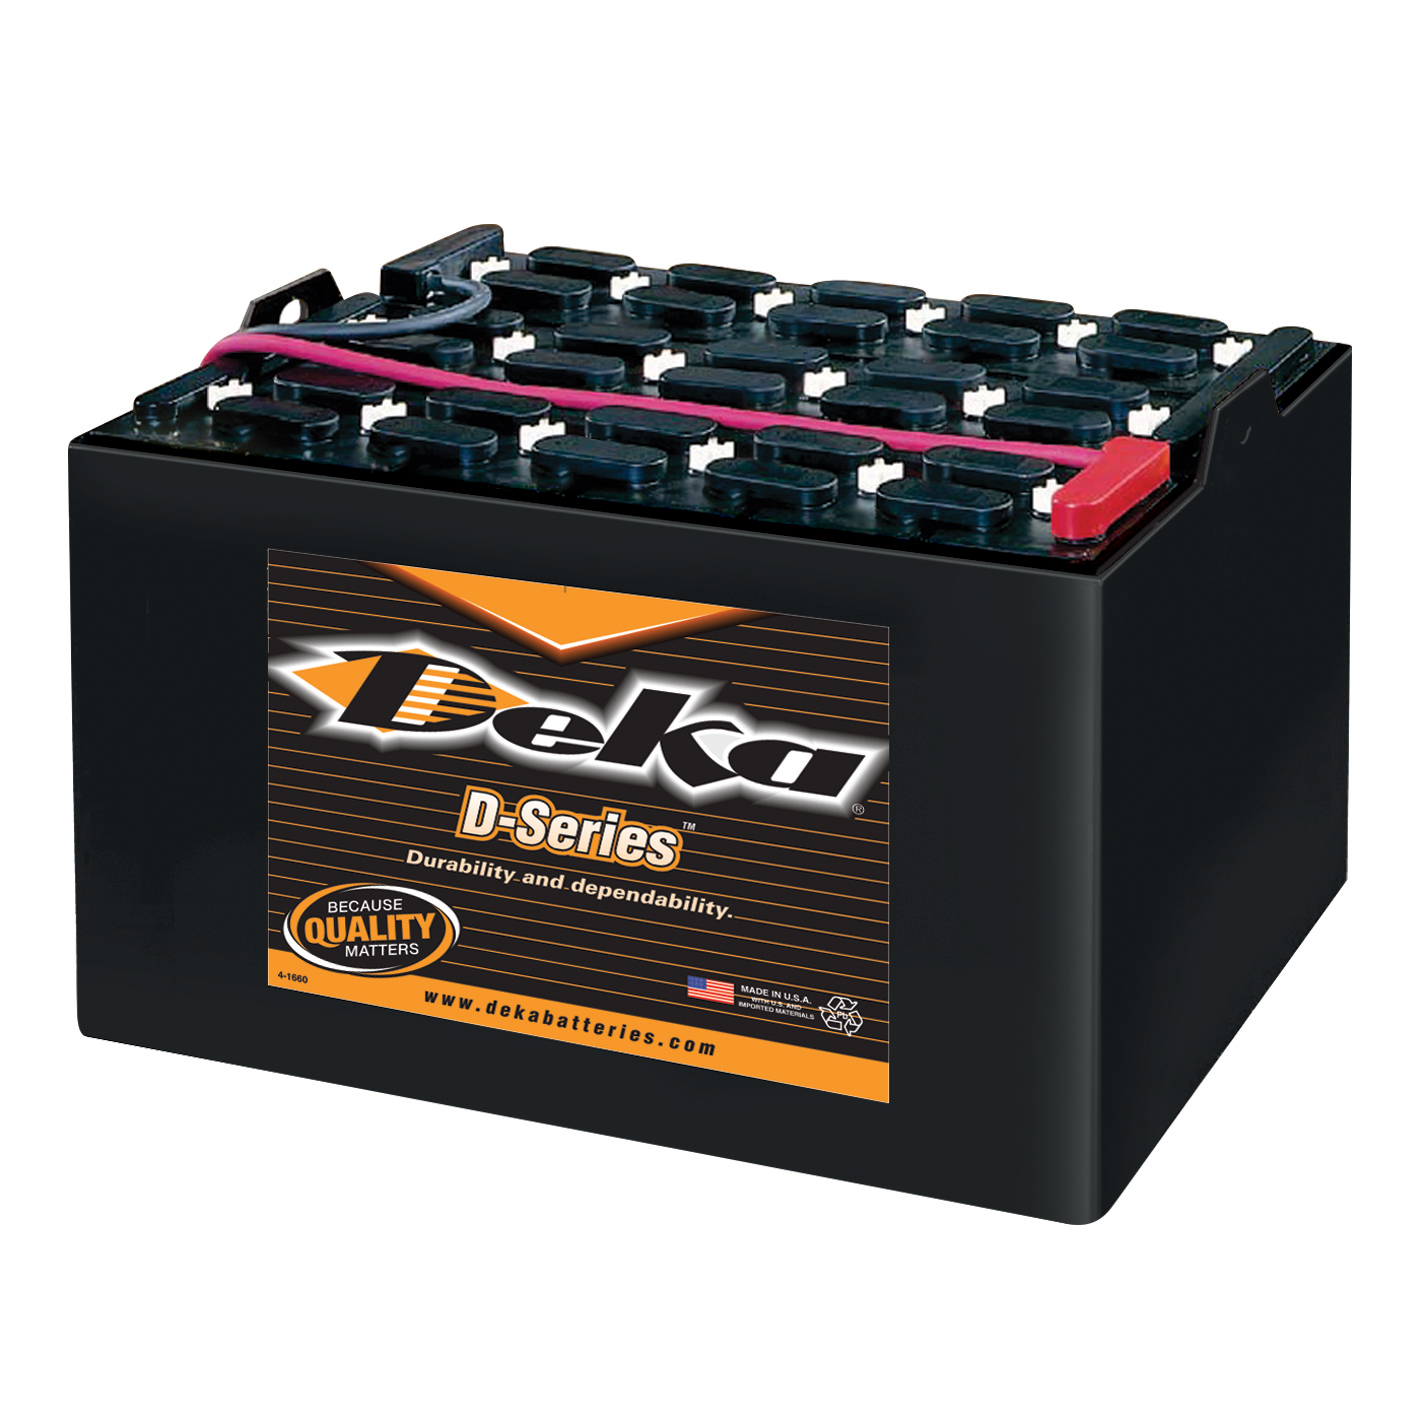 Industrial Battery Storage